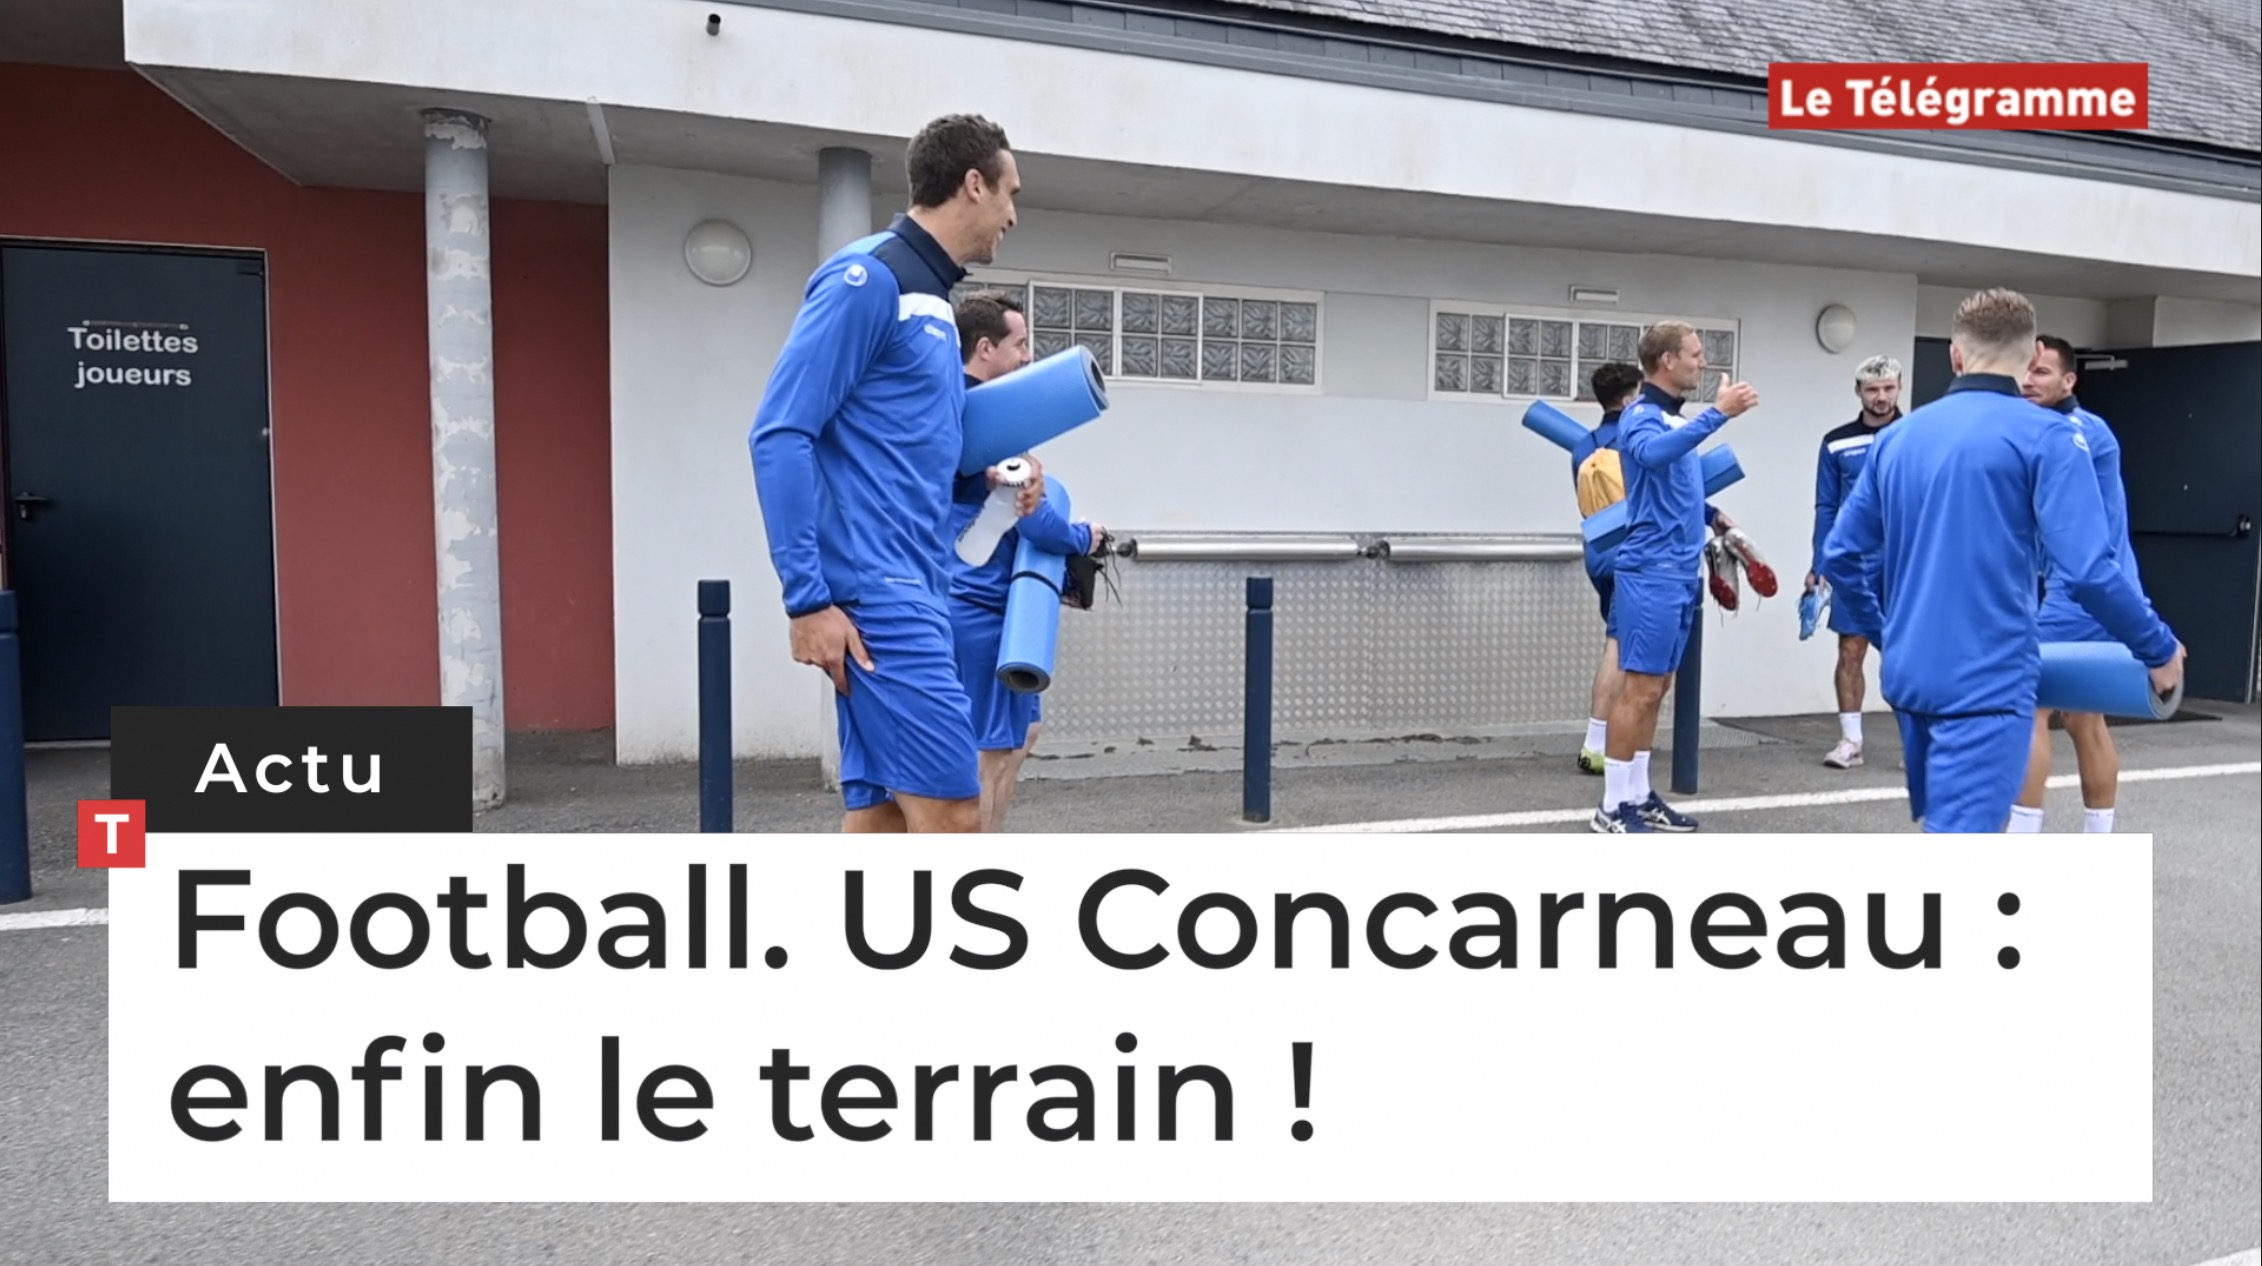 Football. US Concarneau : enfin le terrain ! (Le Télégramme)